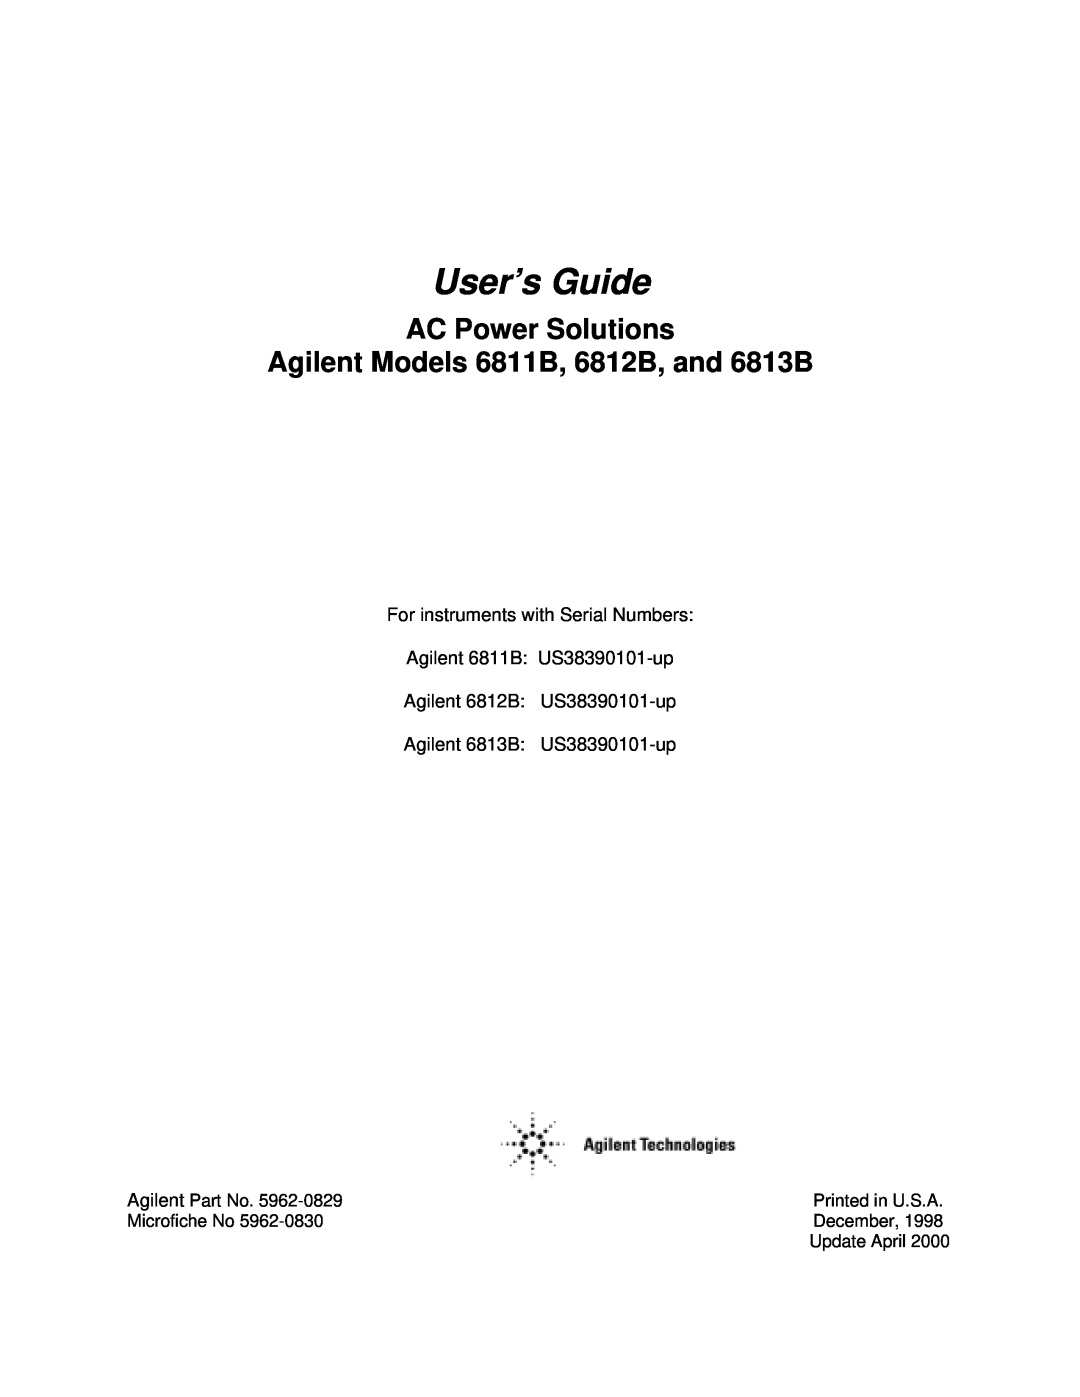 Agilent Technologies manual AC Power Solutions Agilent Models 6811B, 6812B, and 6813B, User’s Guide, Agilent Part No 